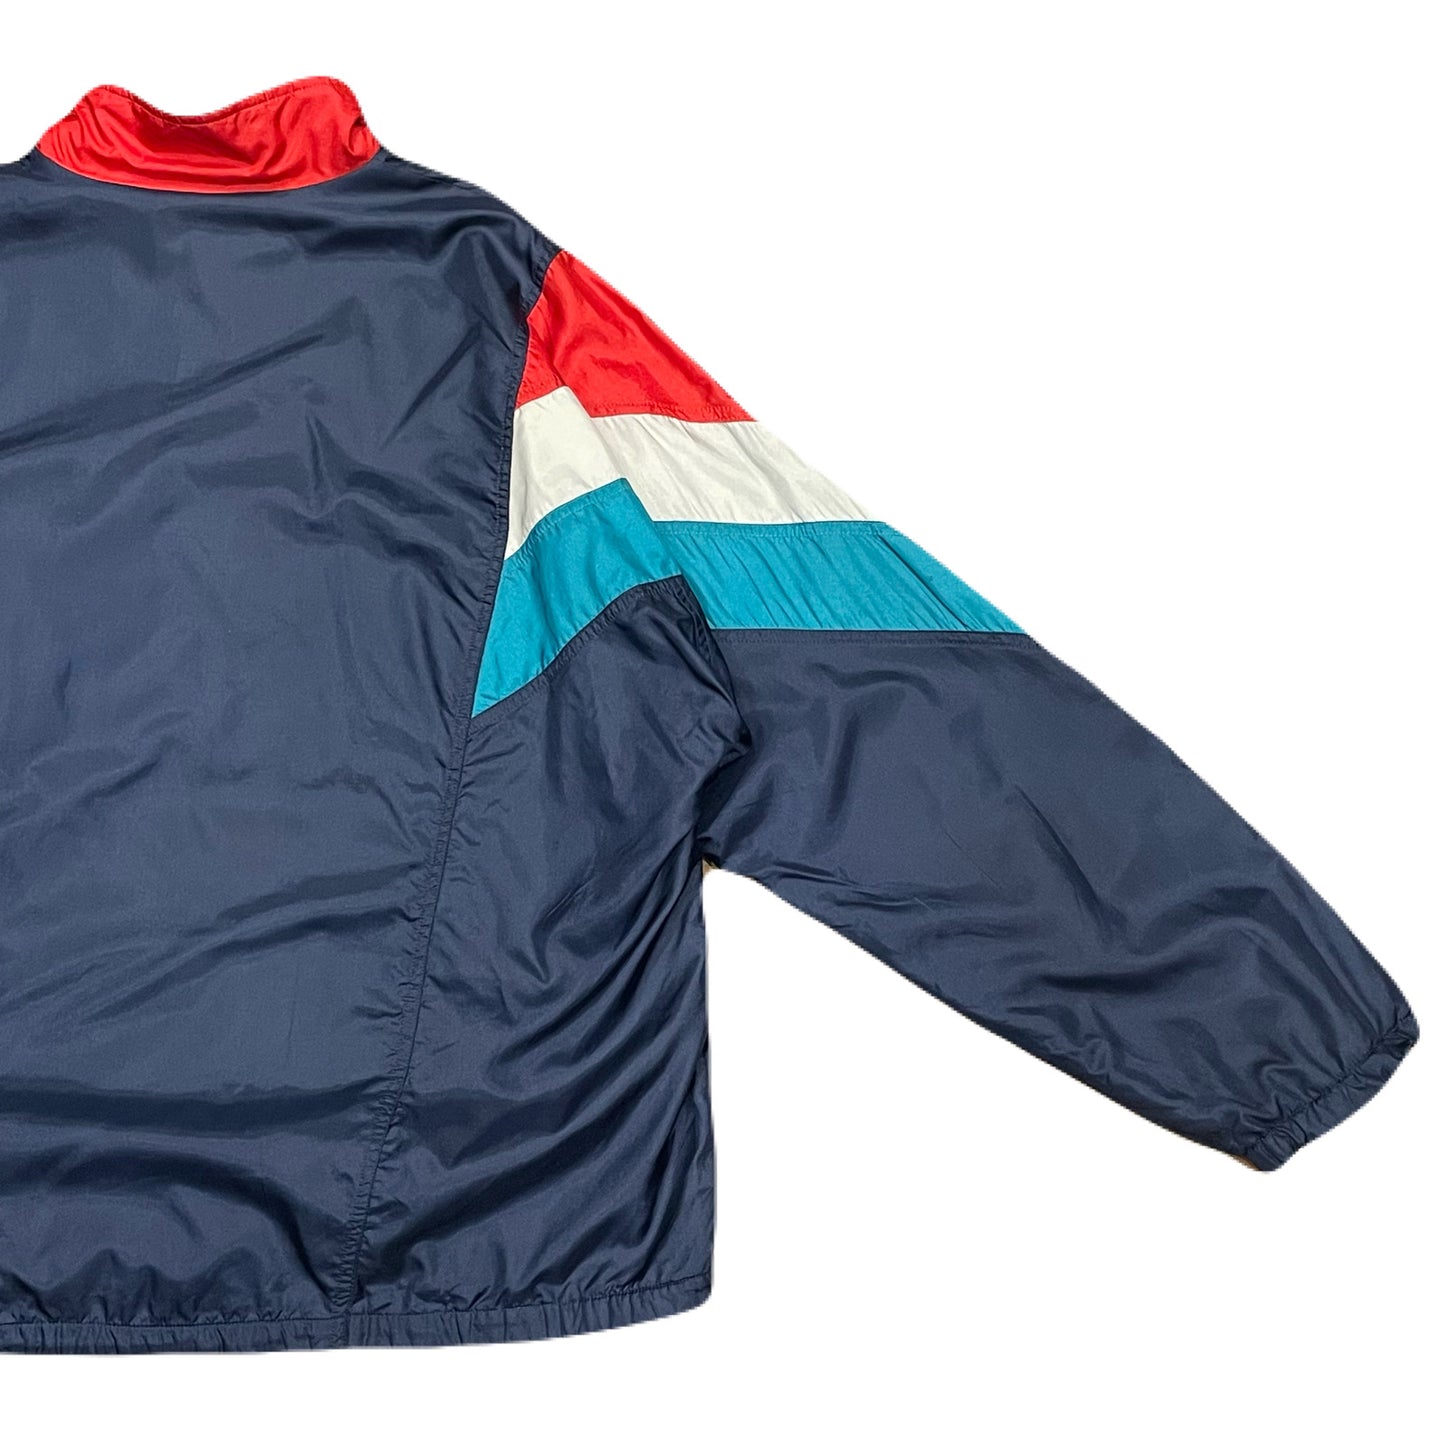 ”80’s adidas” nylon track jacket　XL相当